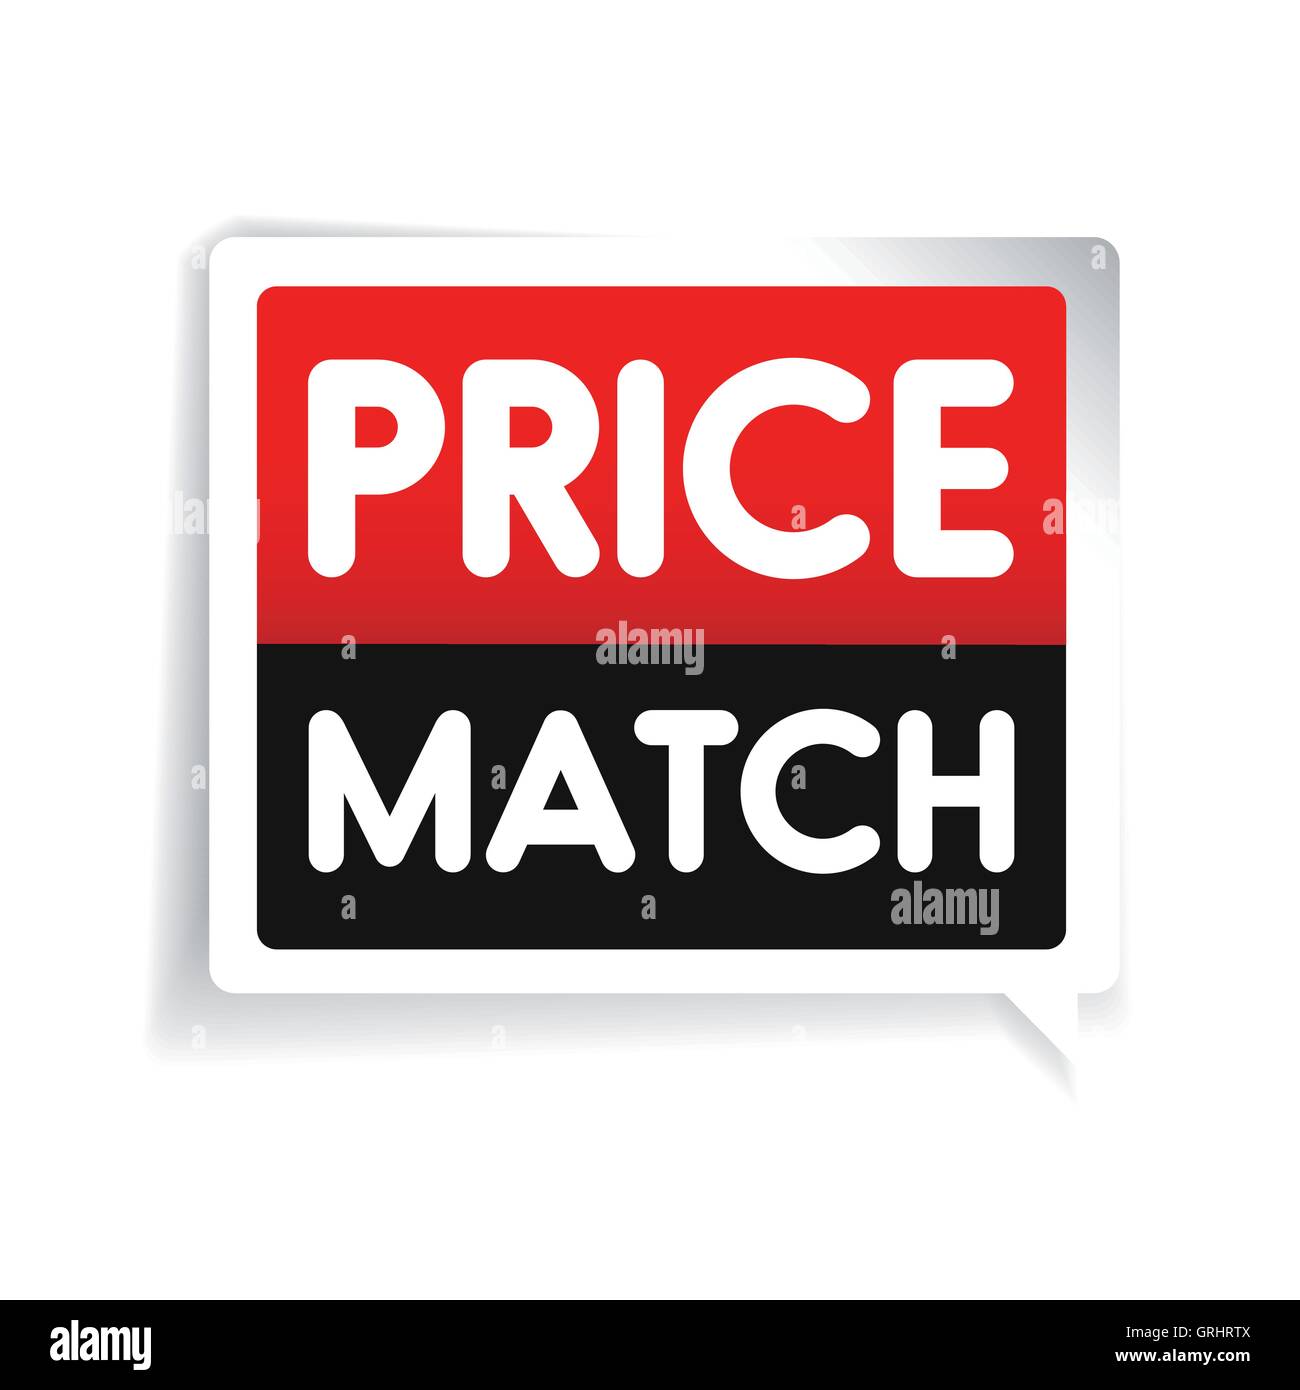 Price match label vector Stock Vector